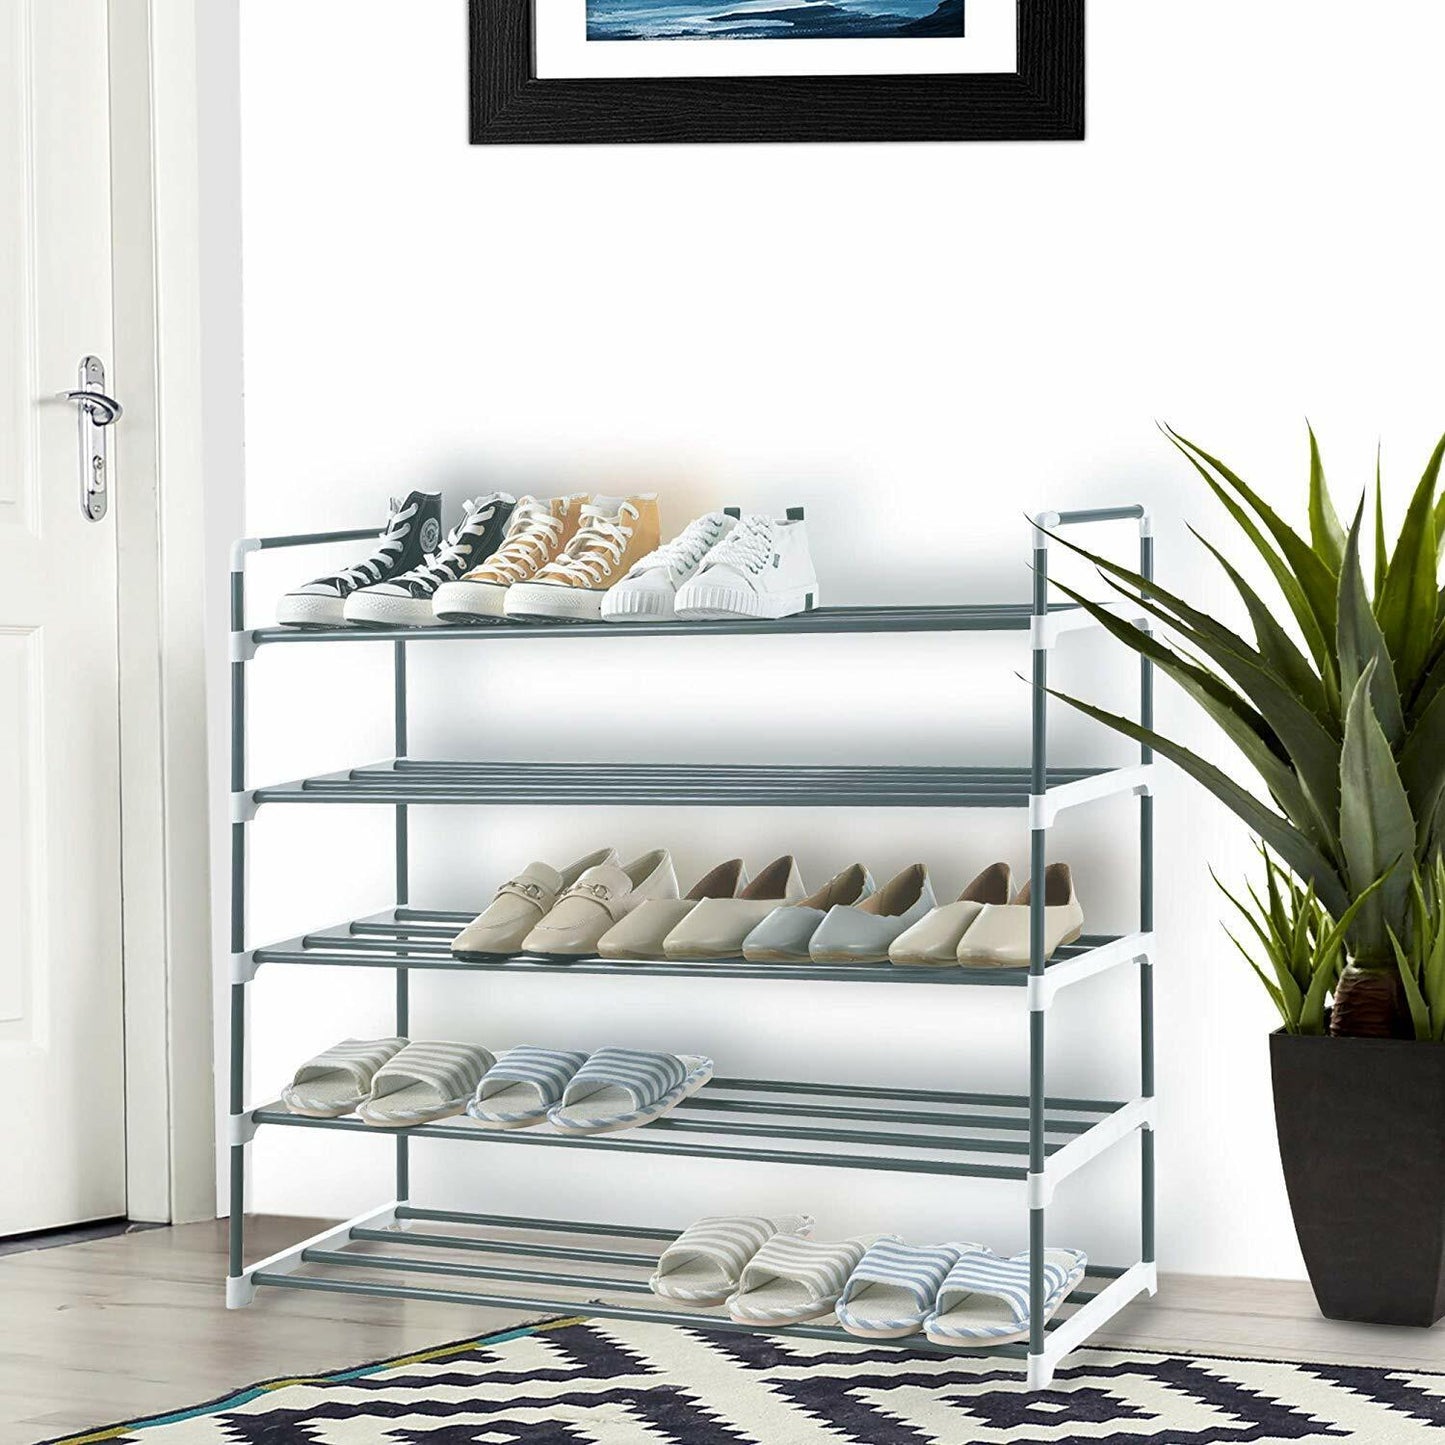 5 Tier Shoe Stand Storage Organiser Rack Compact Space Save Shelf HEAVY DUTY